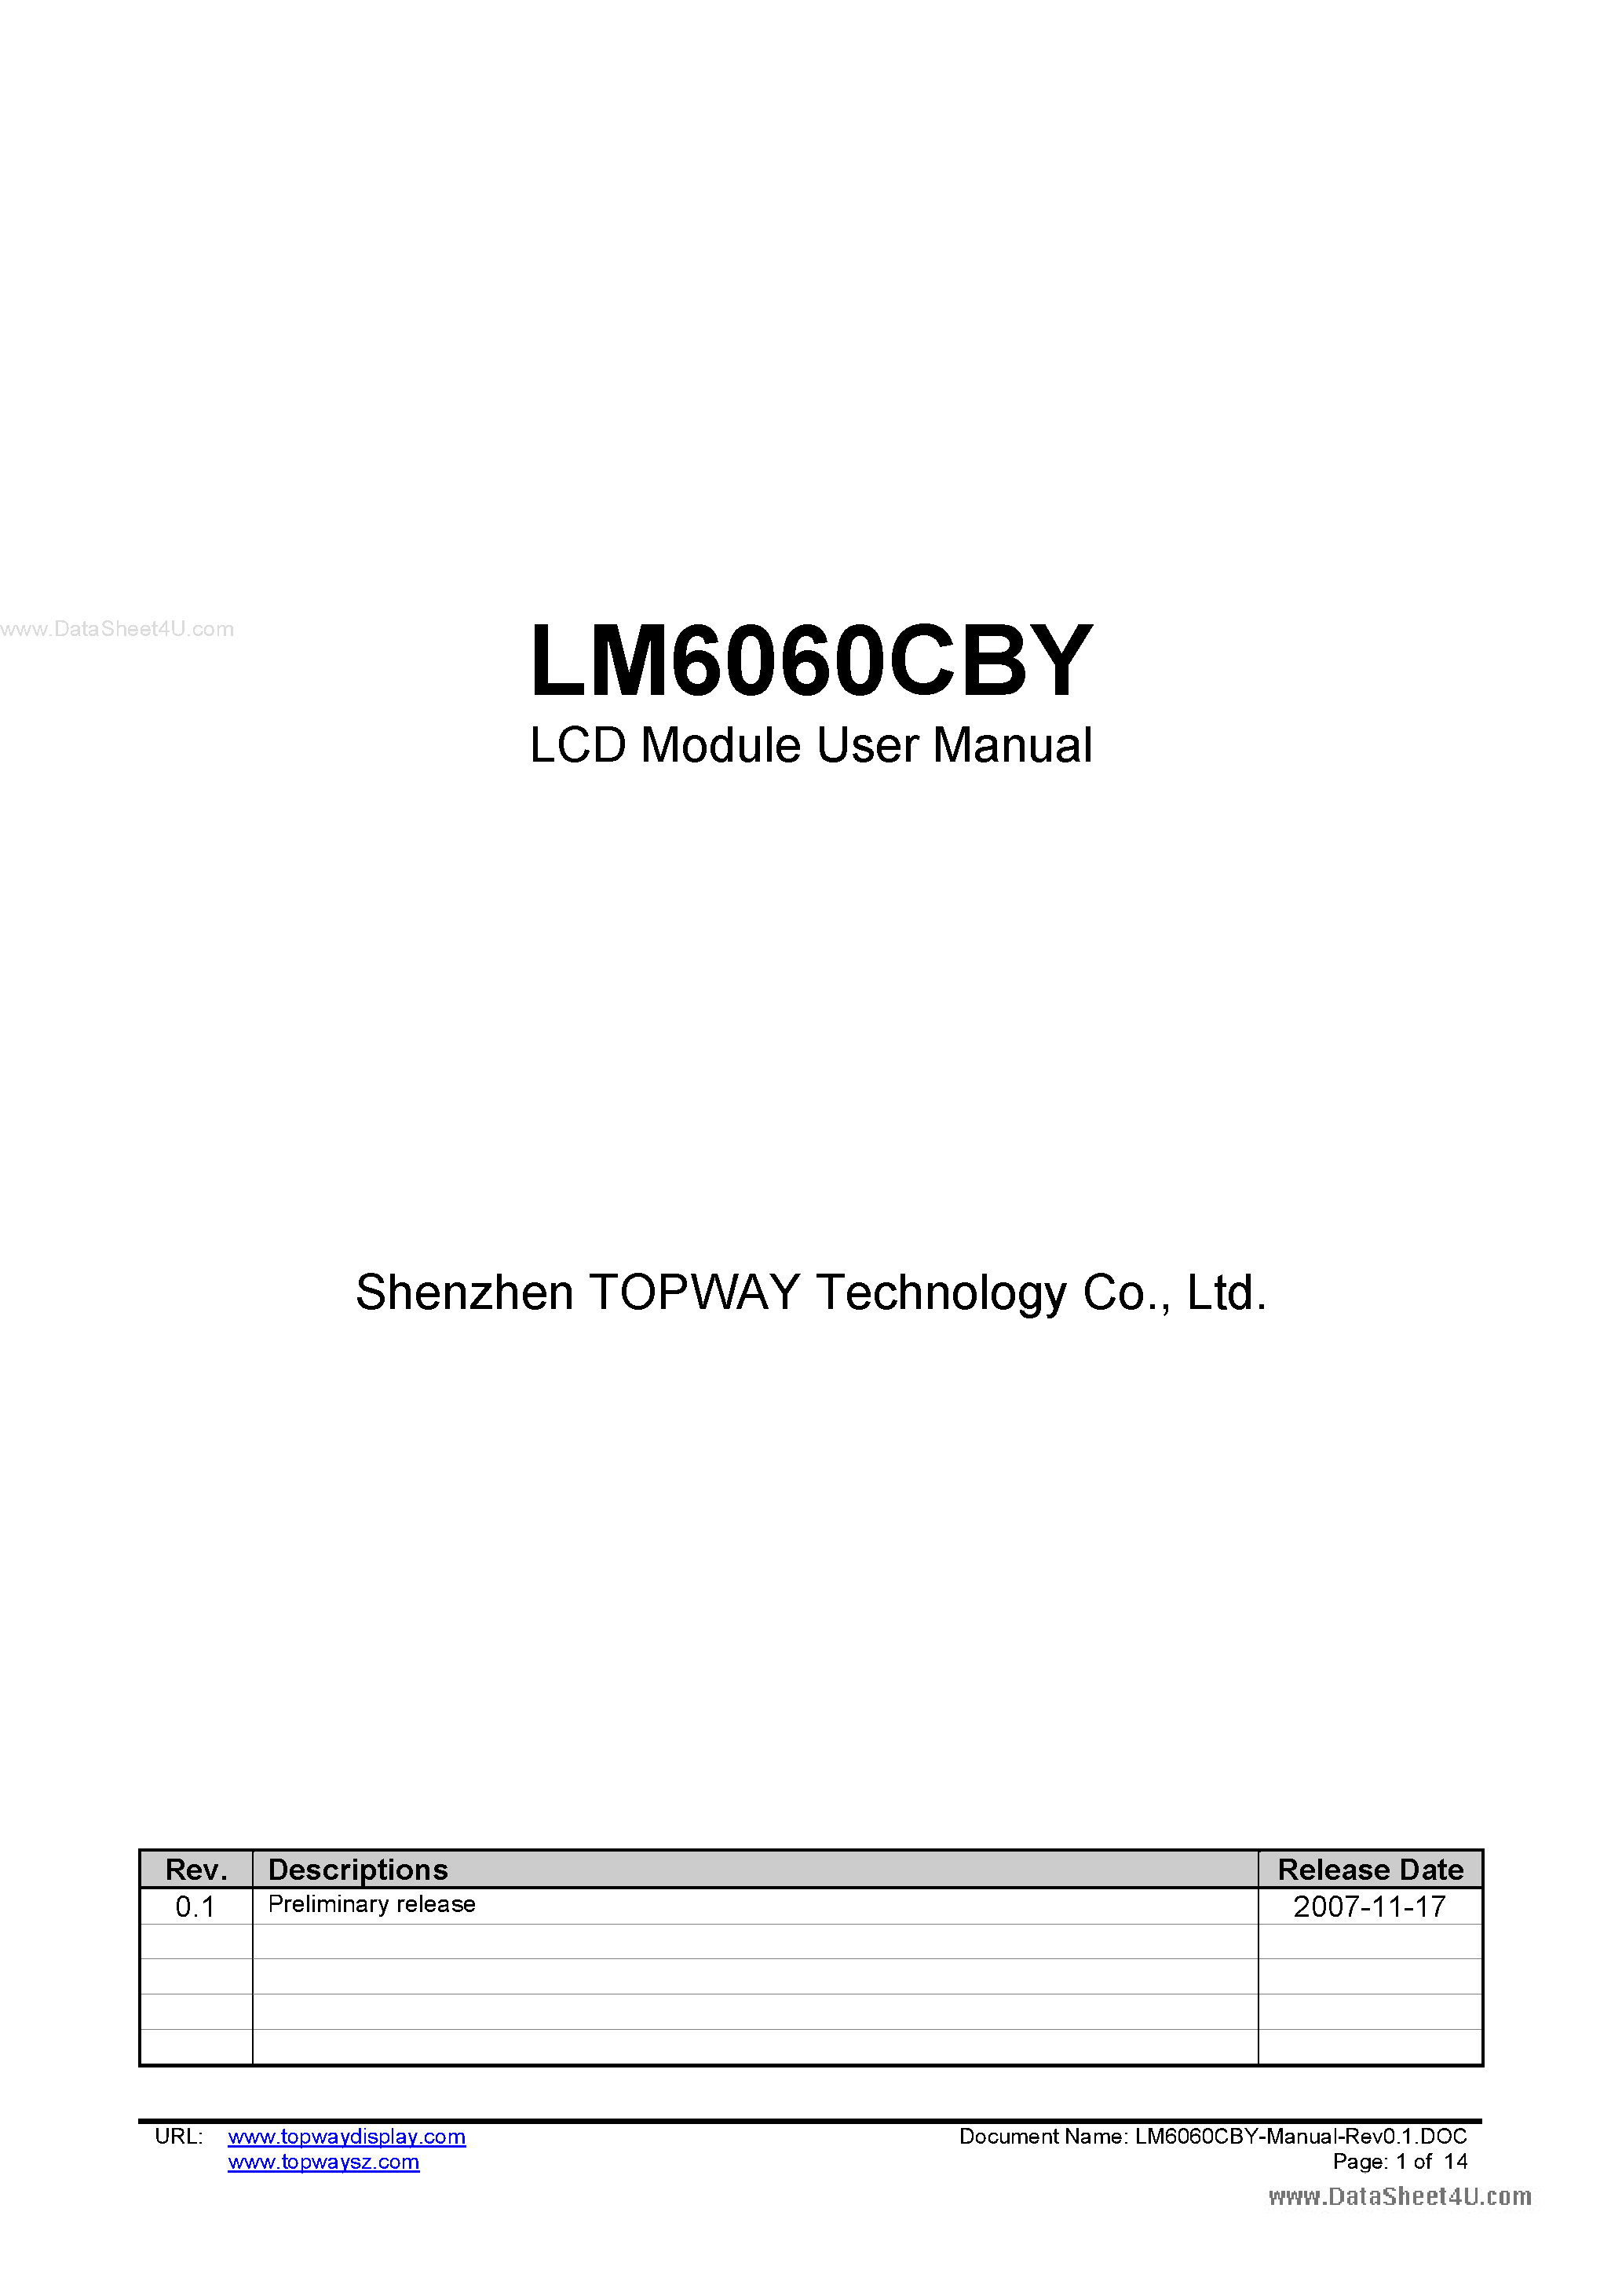 Даташит LM6060CBY - LCD Module страница 1